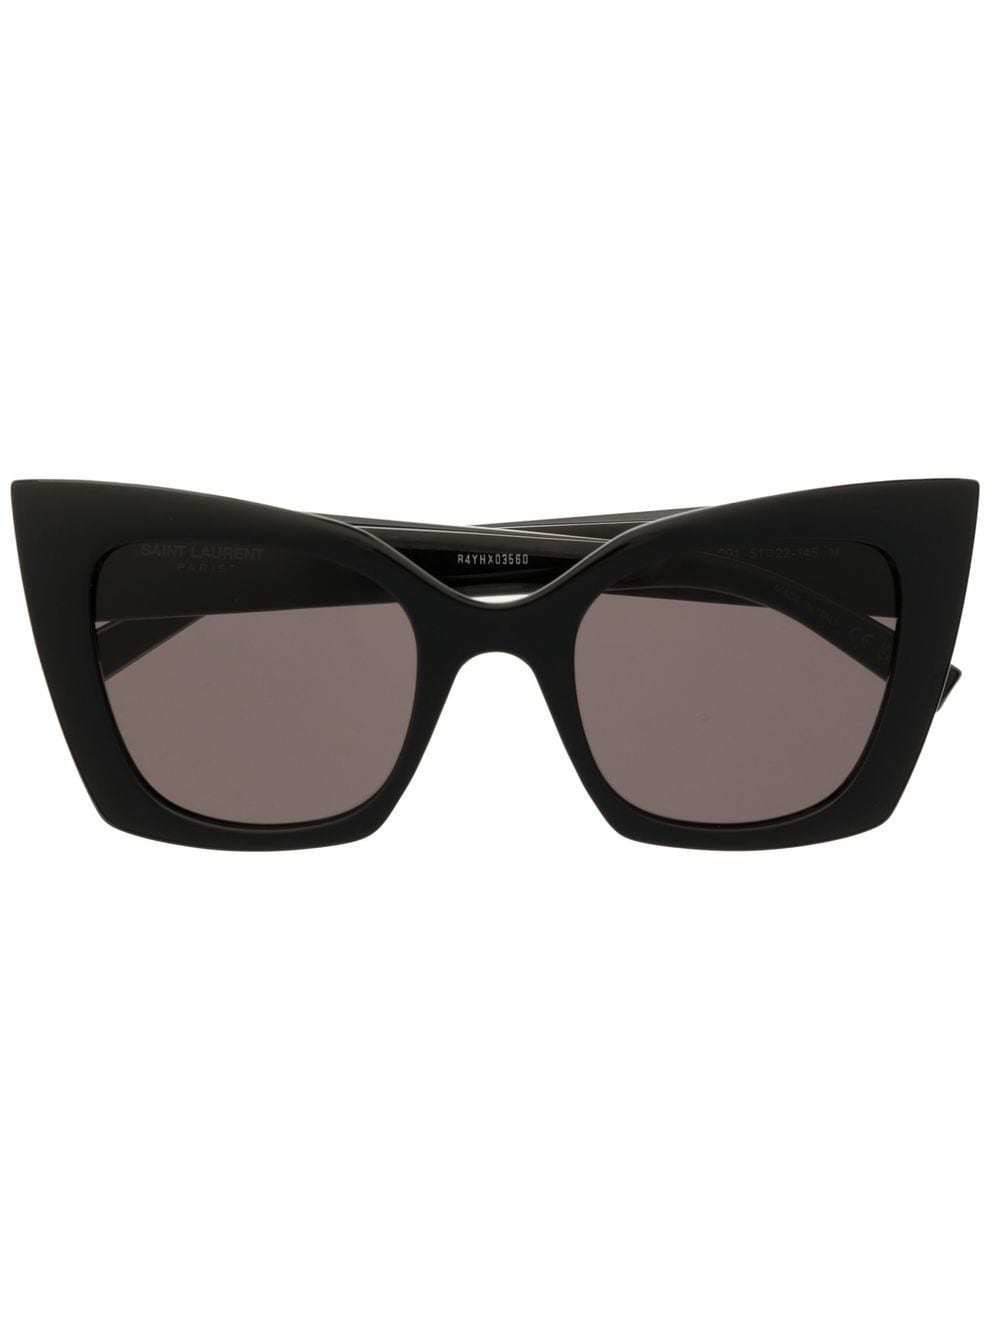 Saint Laurent Eyewear bold cat eye frame sunglasses - Black von Saint Laurent Eyewear